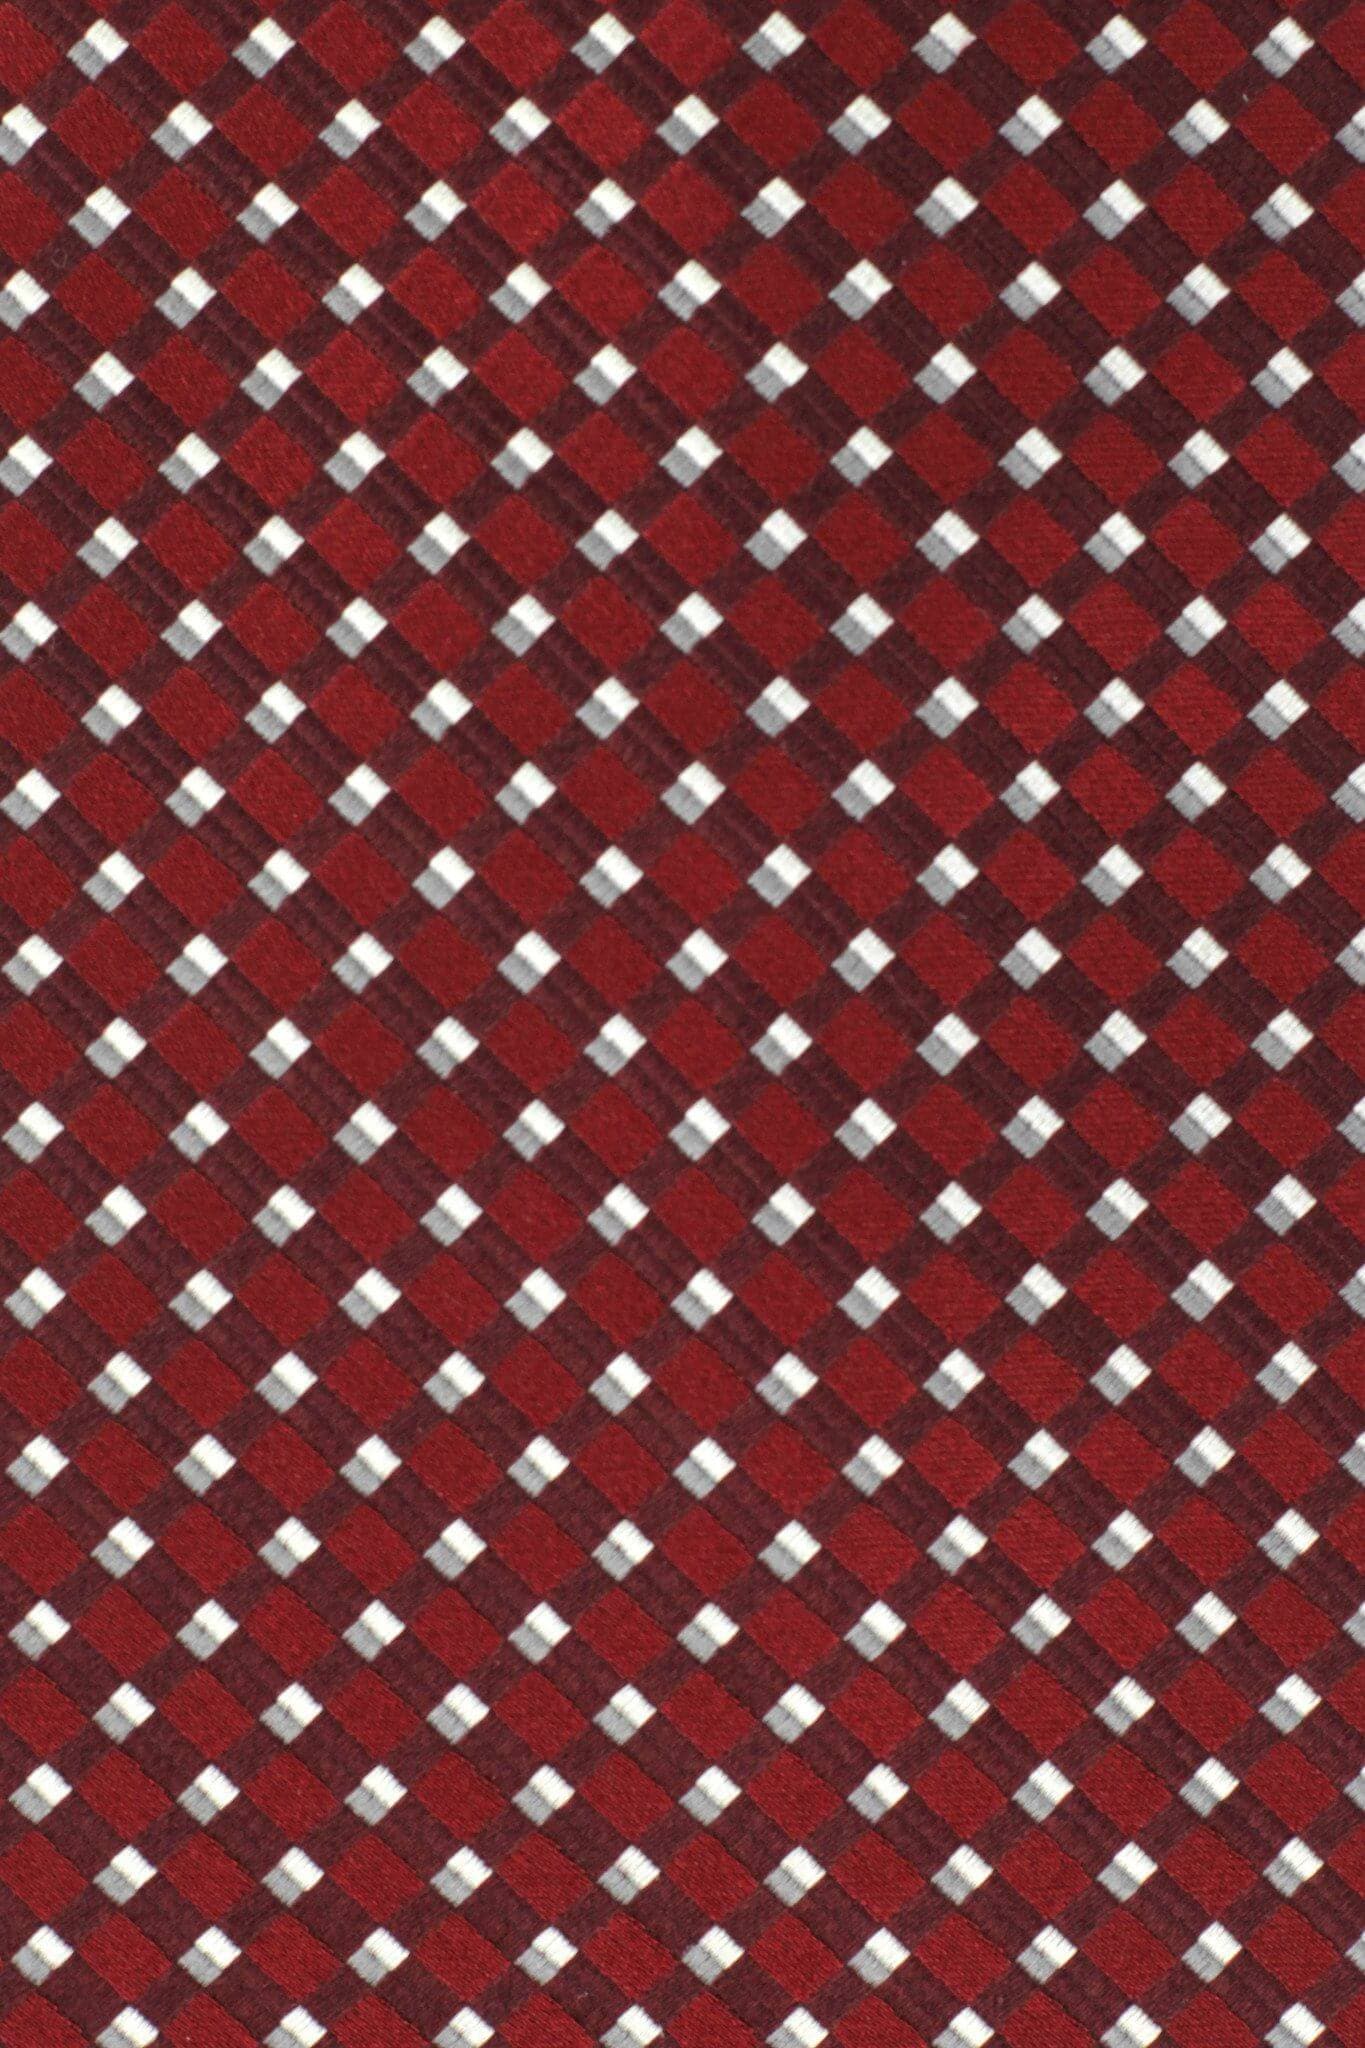 Burgundy Maroon silk fabric detail zoom shot